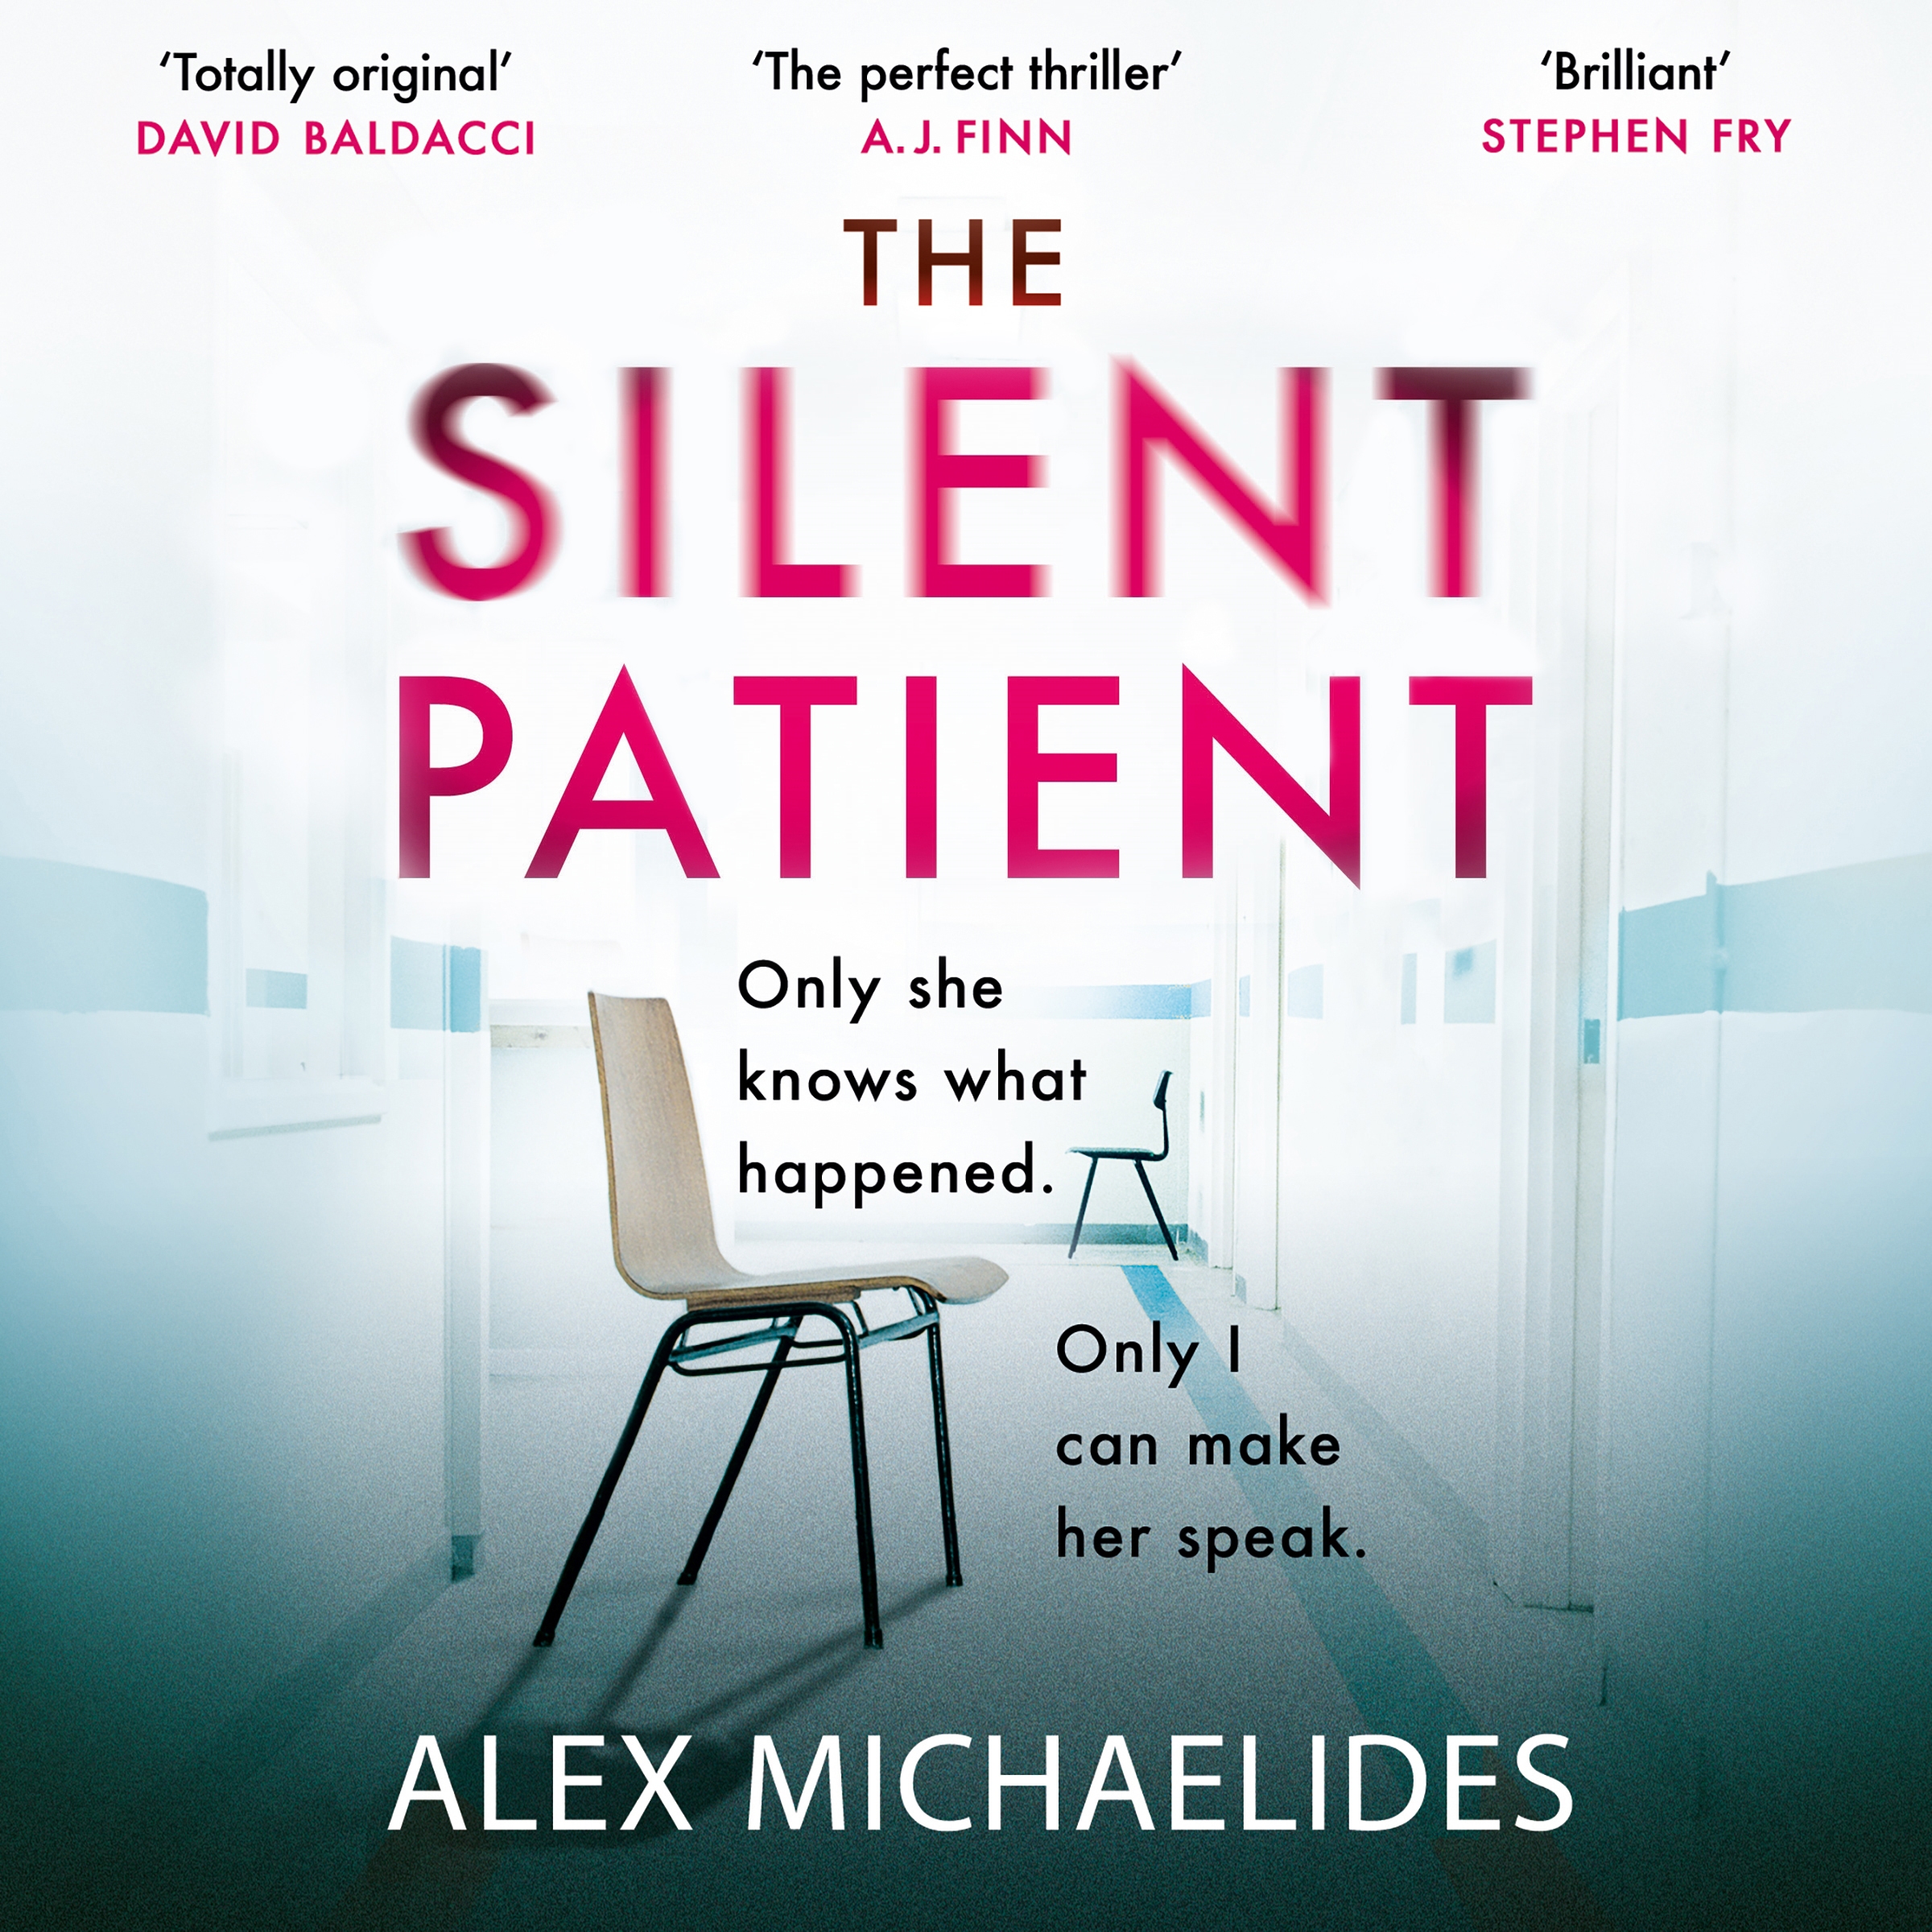 the silent patient movie on netflix